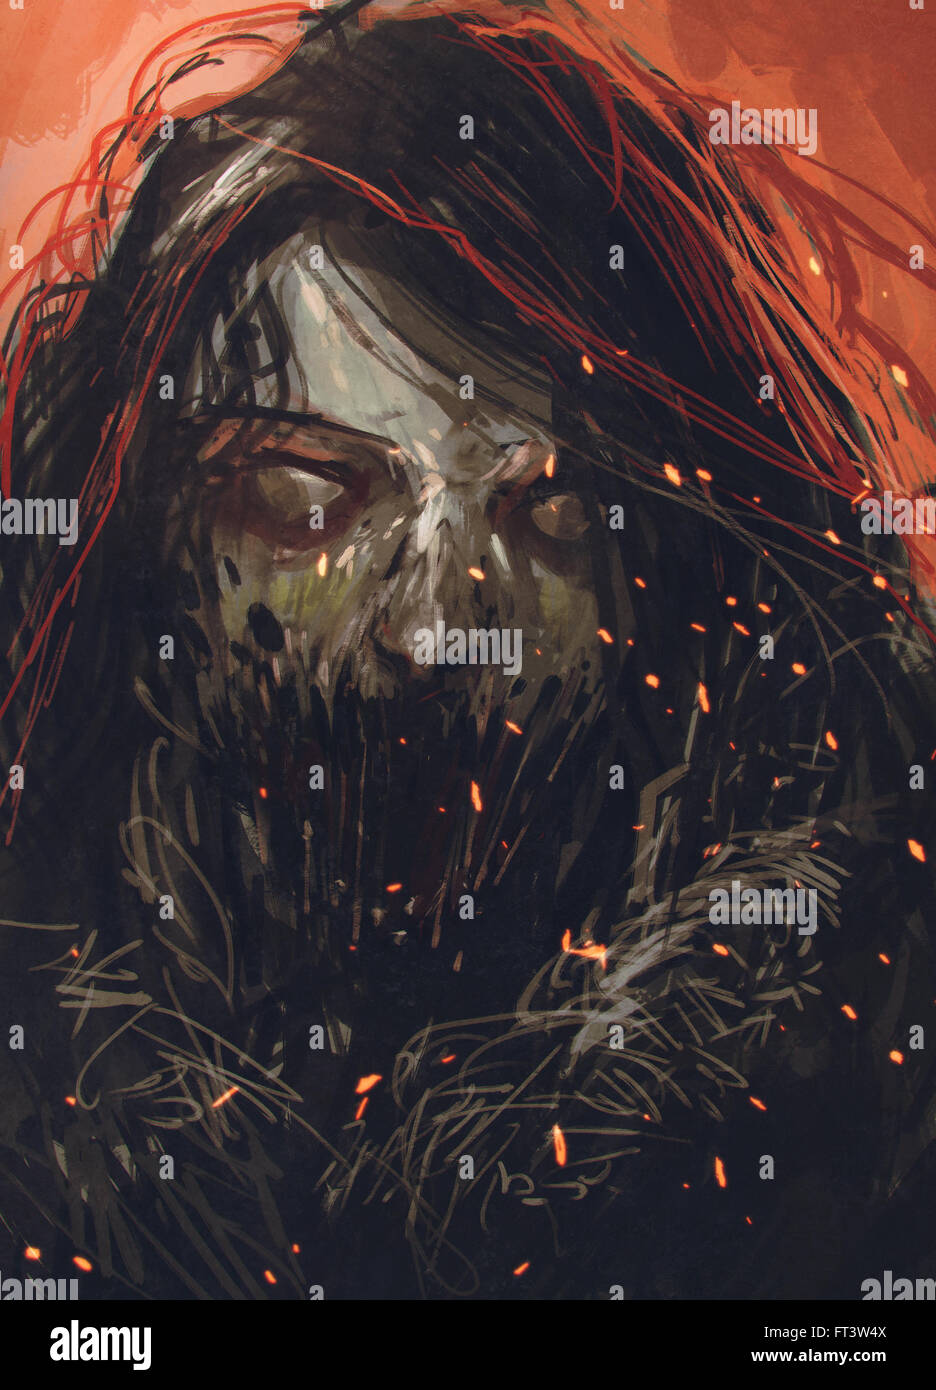 zombie face,horror portrait,illustration painting Stock Photo